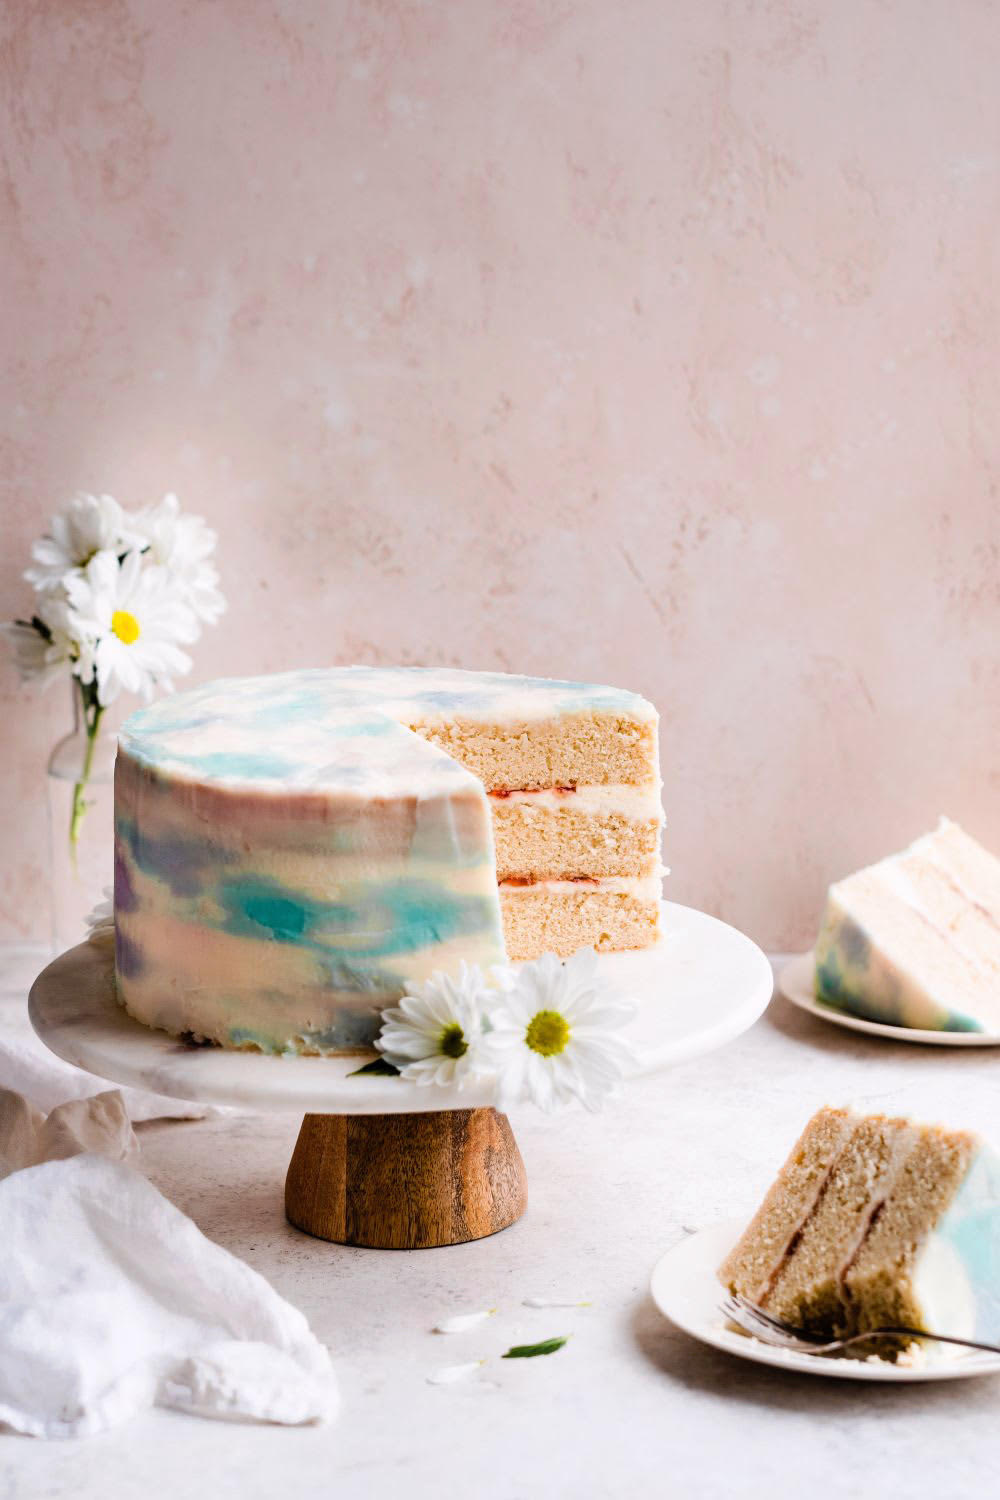 Watercolor Fondant Cake - Cooking LSL